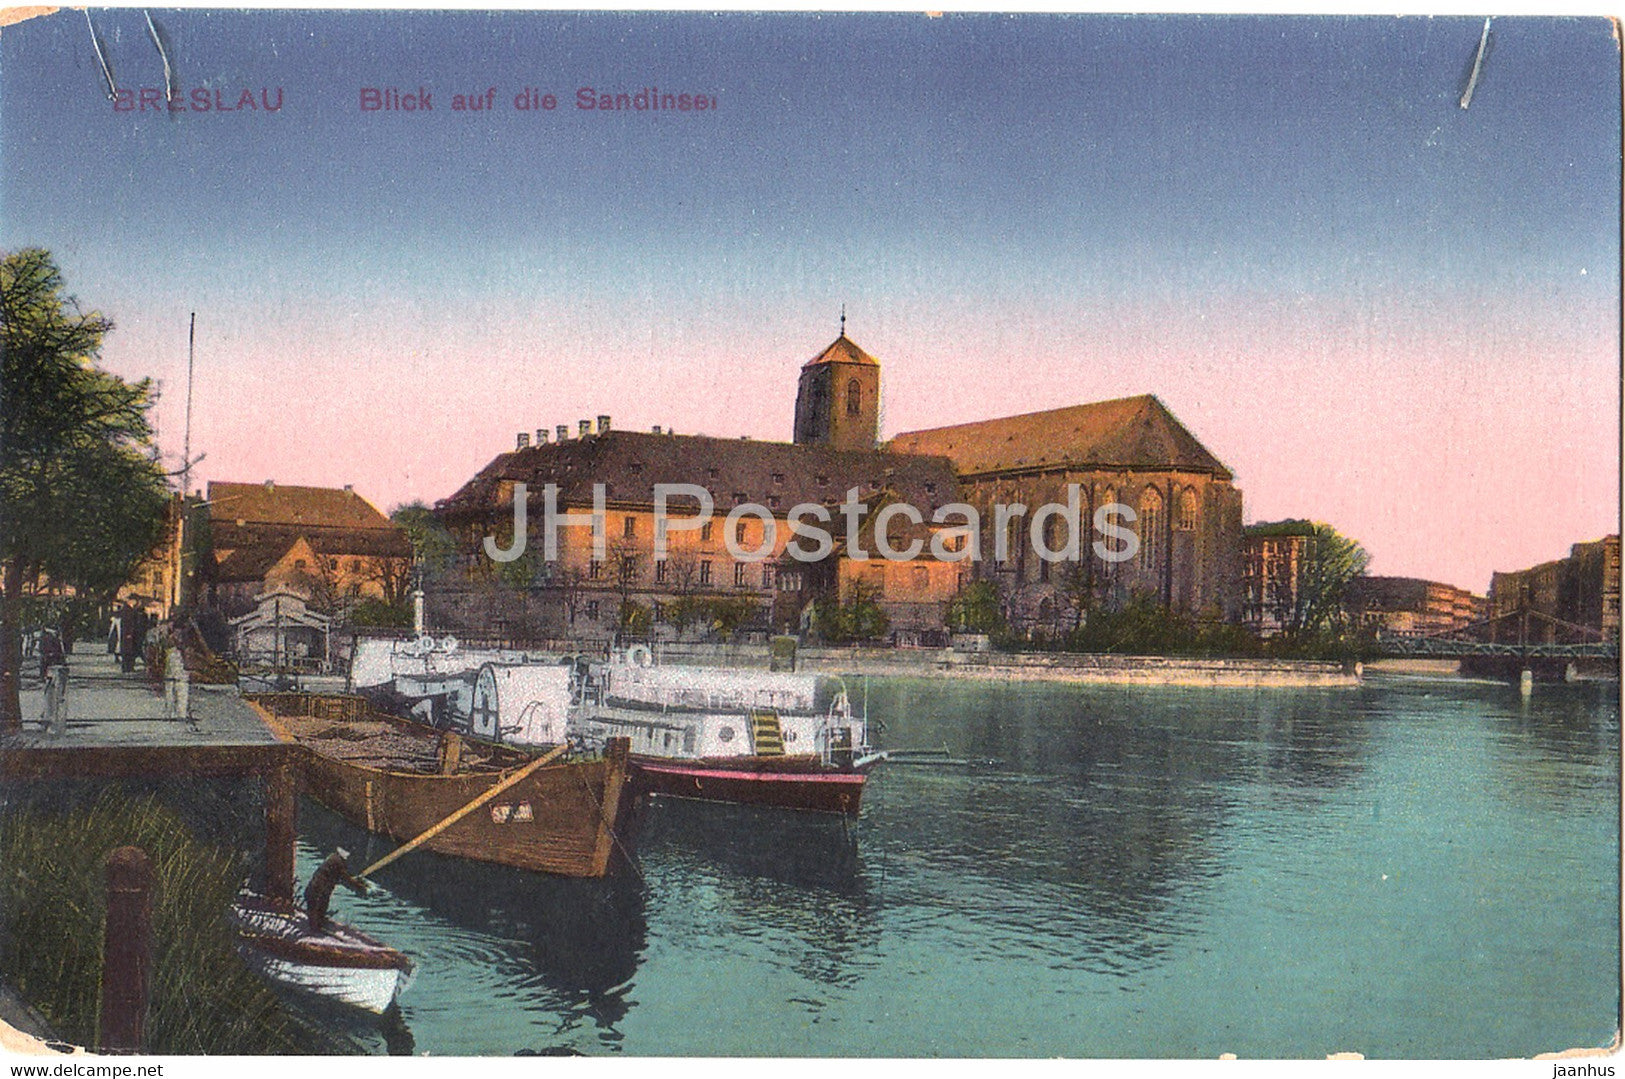 Breslau - Wroclaw - Blick auf die Sandinsel - boat - 152 - old postcard - Poland - unused - JH Postcards